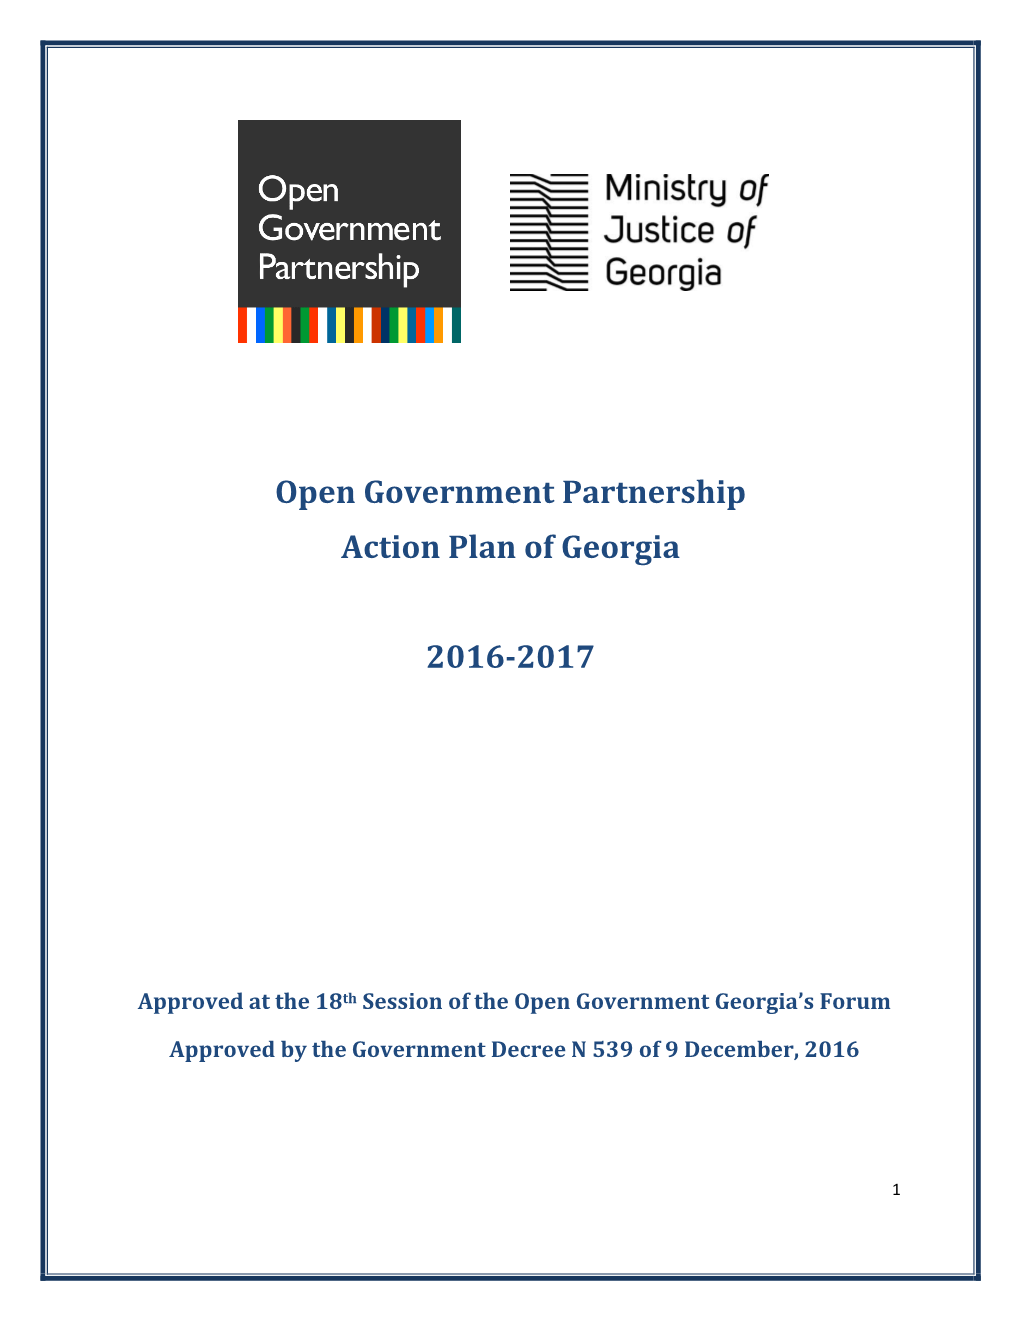 OGP Georgia Action Plan for 2016-2017